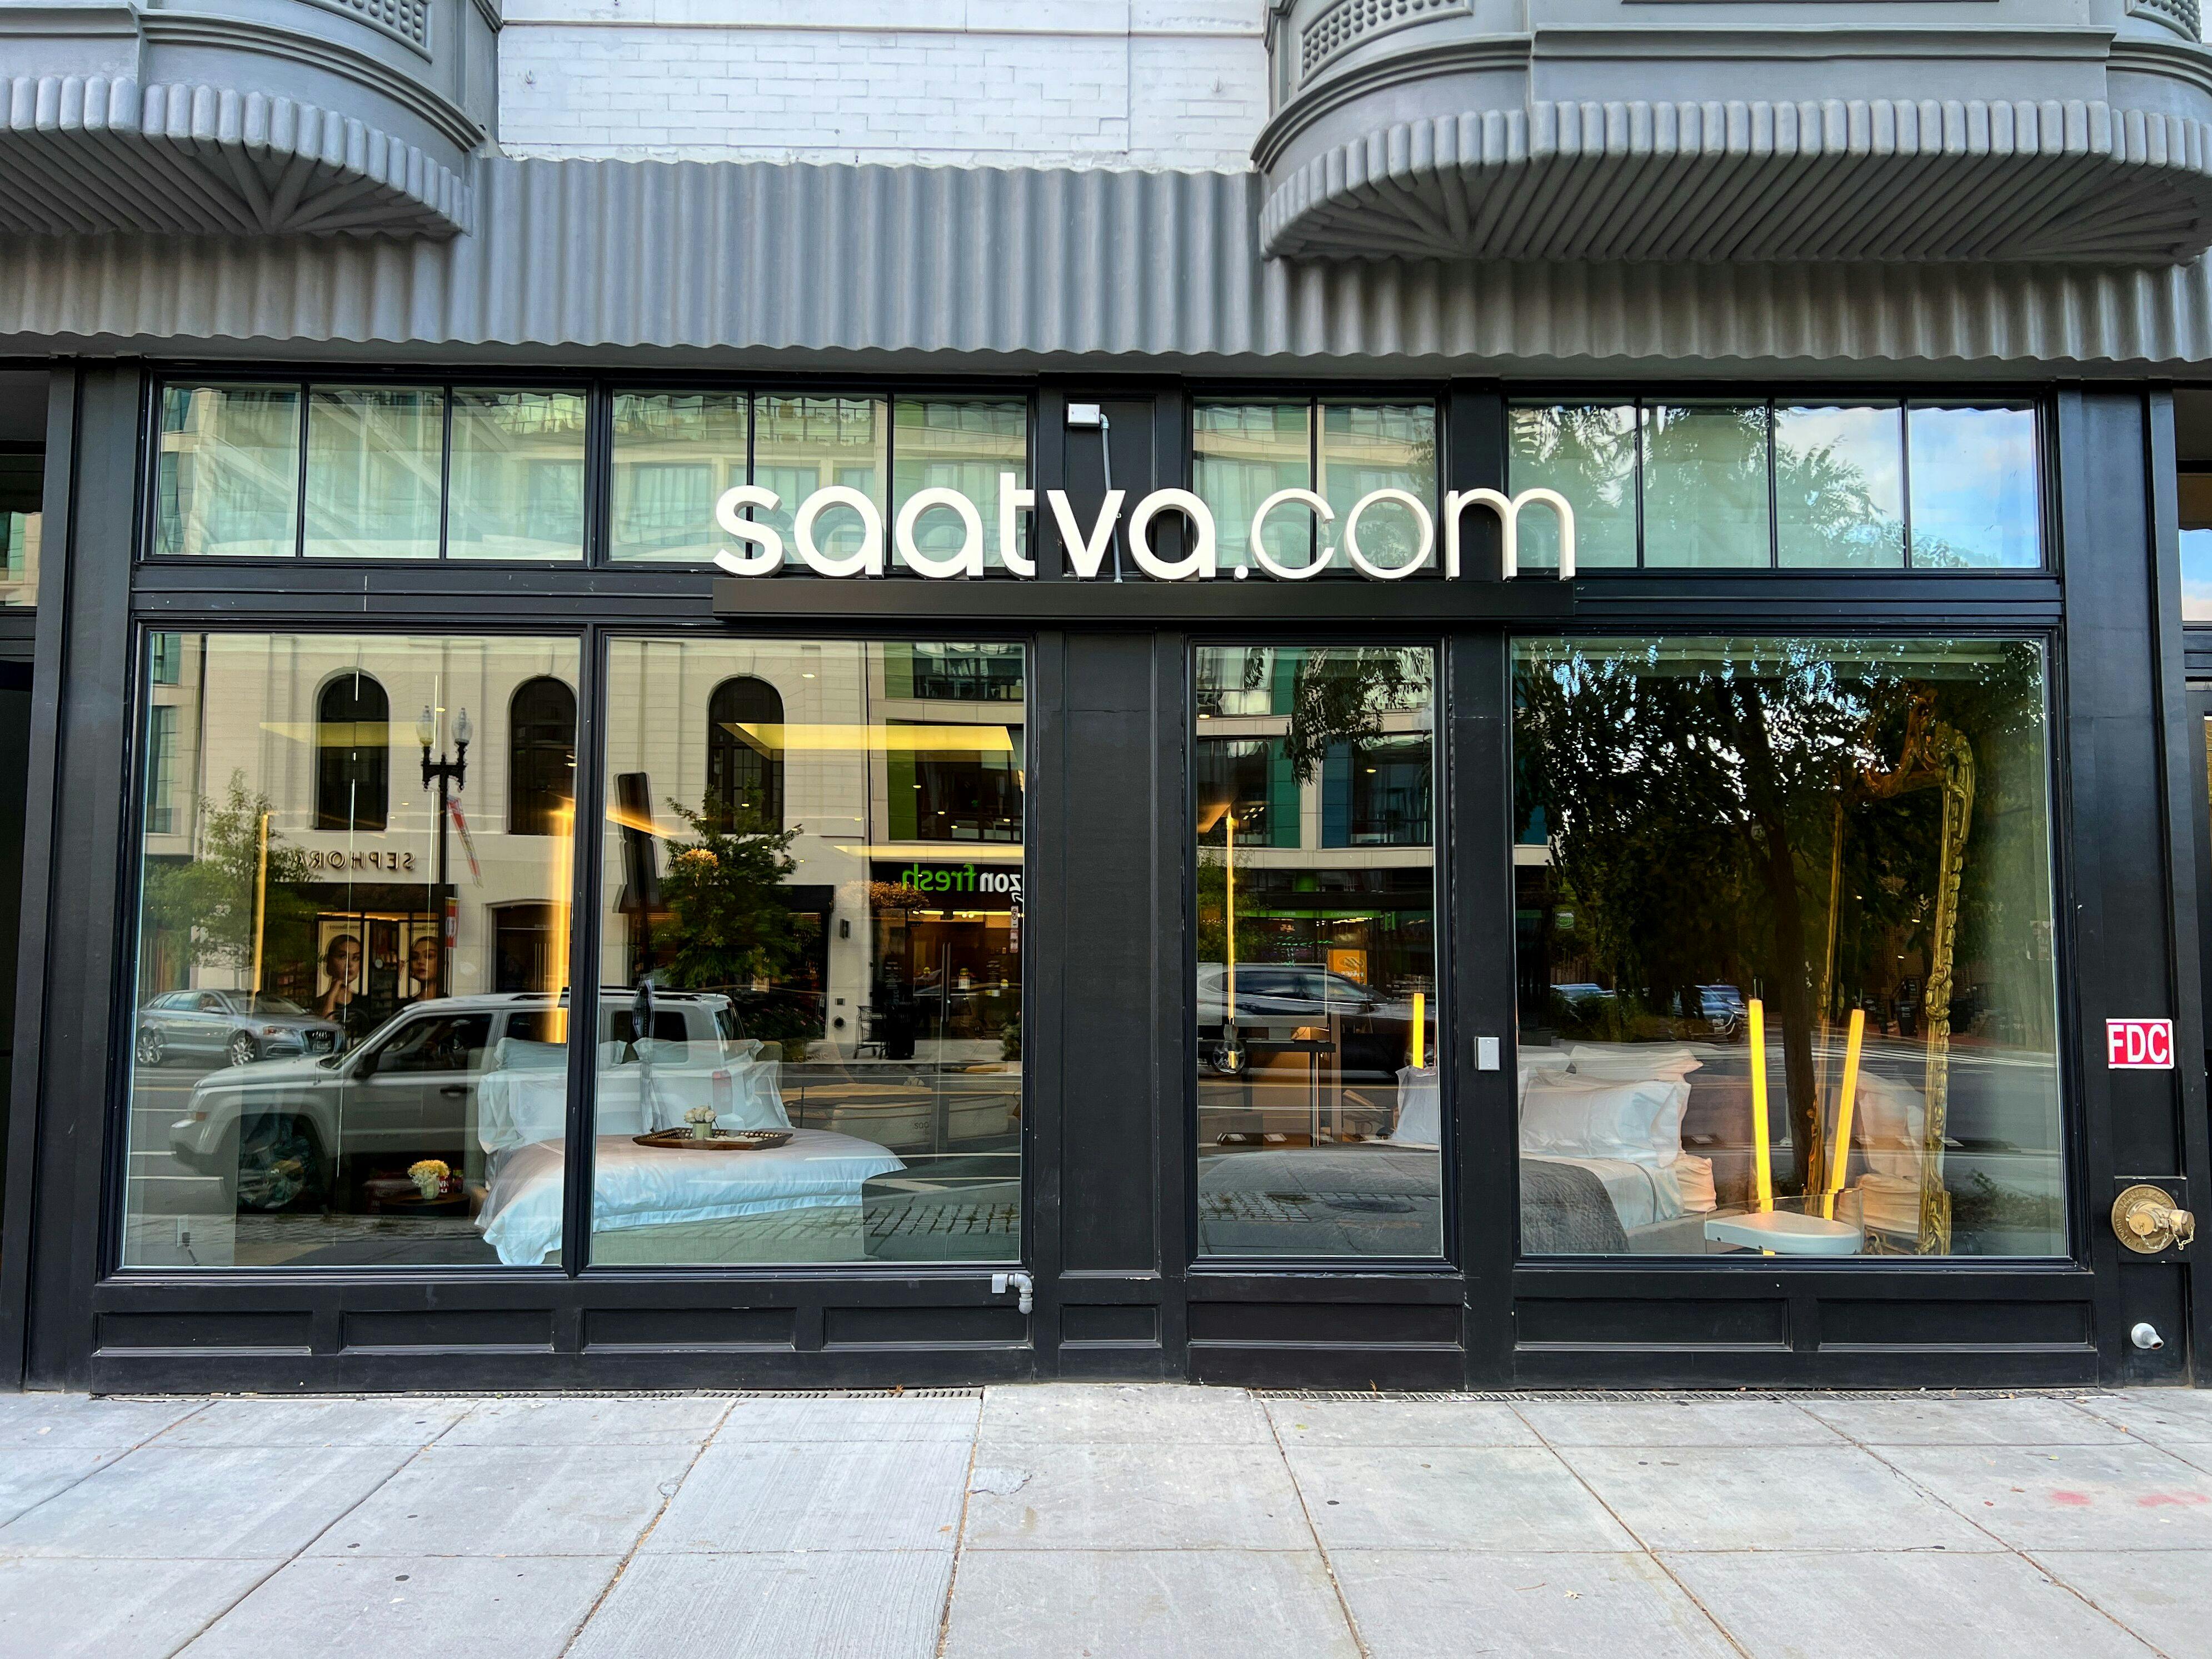 The Saatva Washington D.C. Viewing Room Storefront